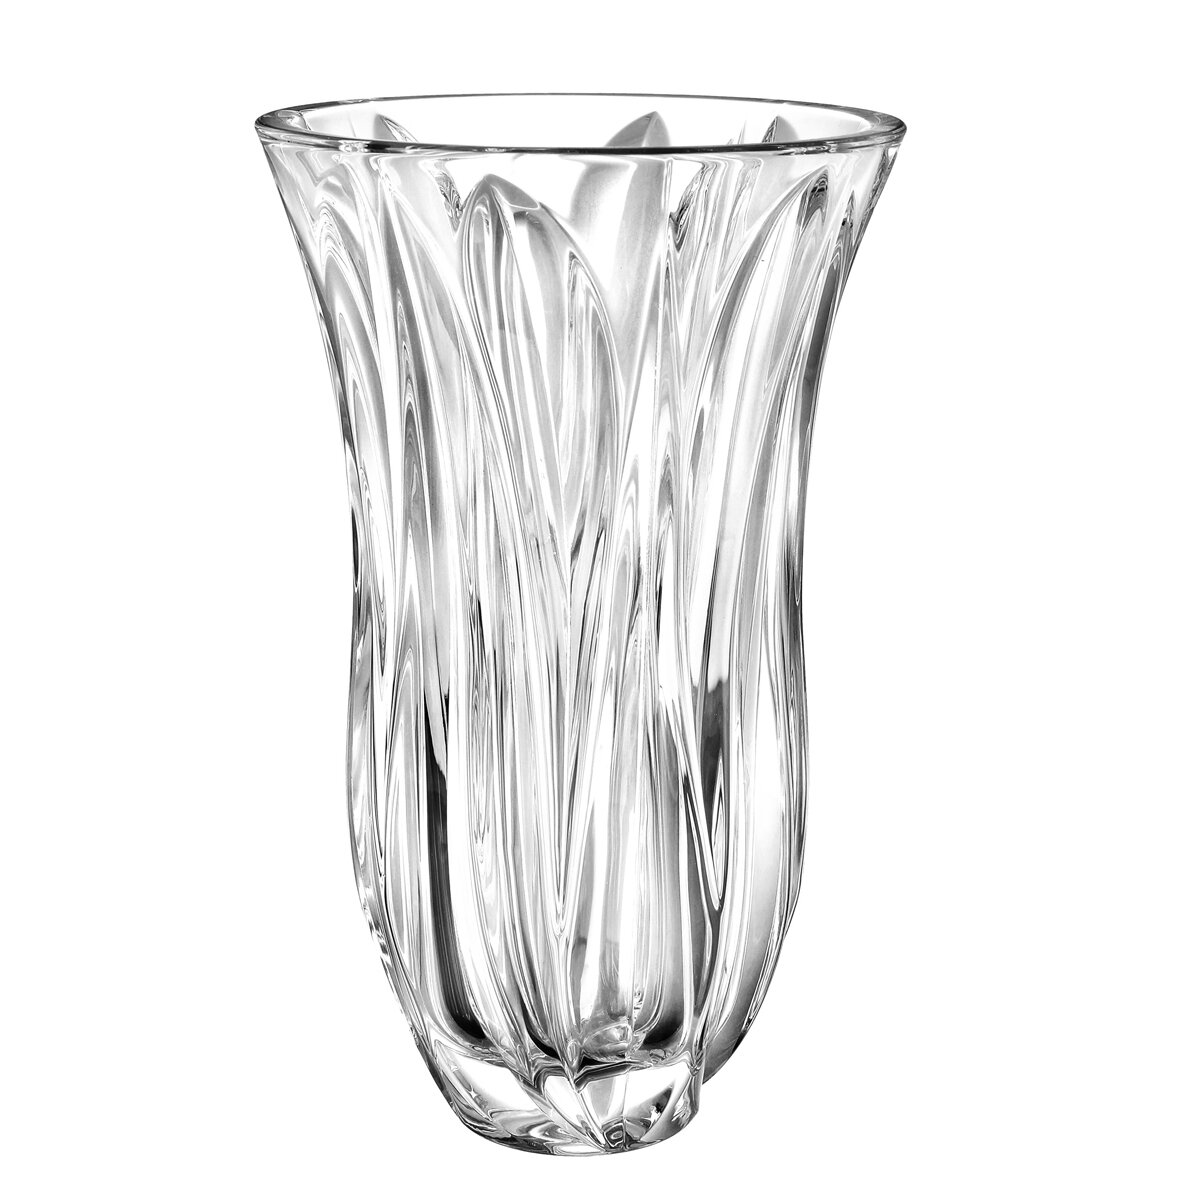 Flame" - ваза для цветов, 29 см, 1 штука, бренд "Аурум Кристал Богемия